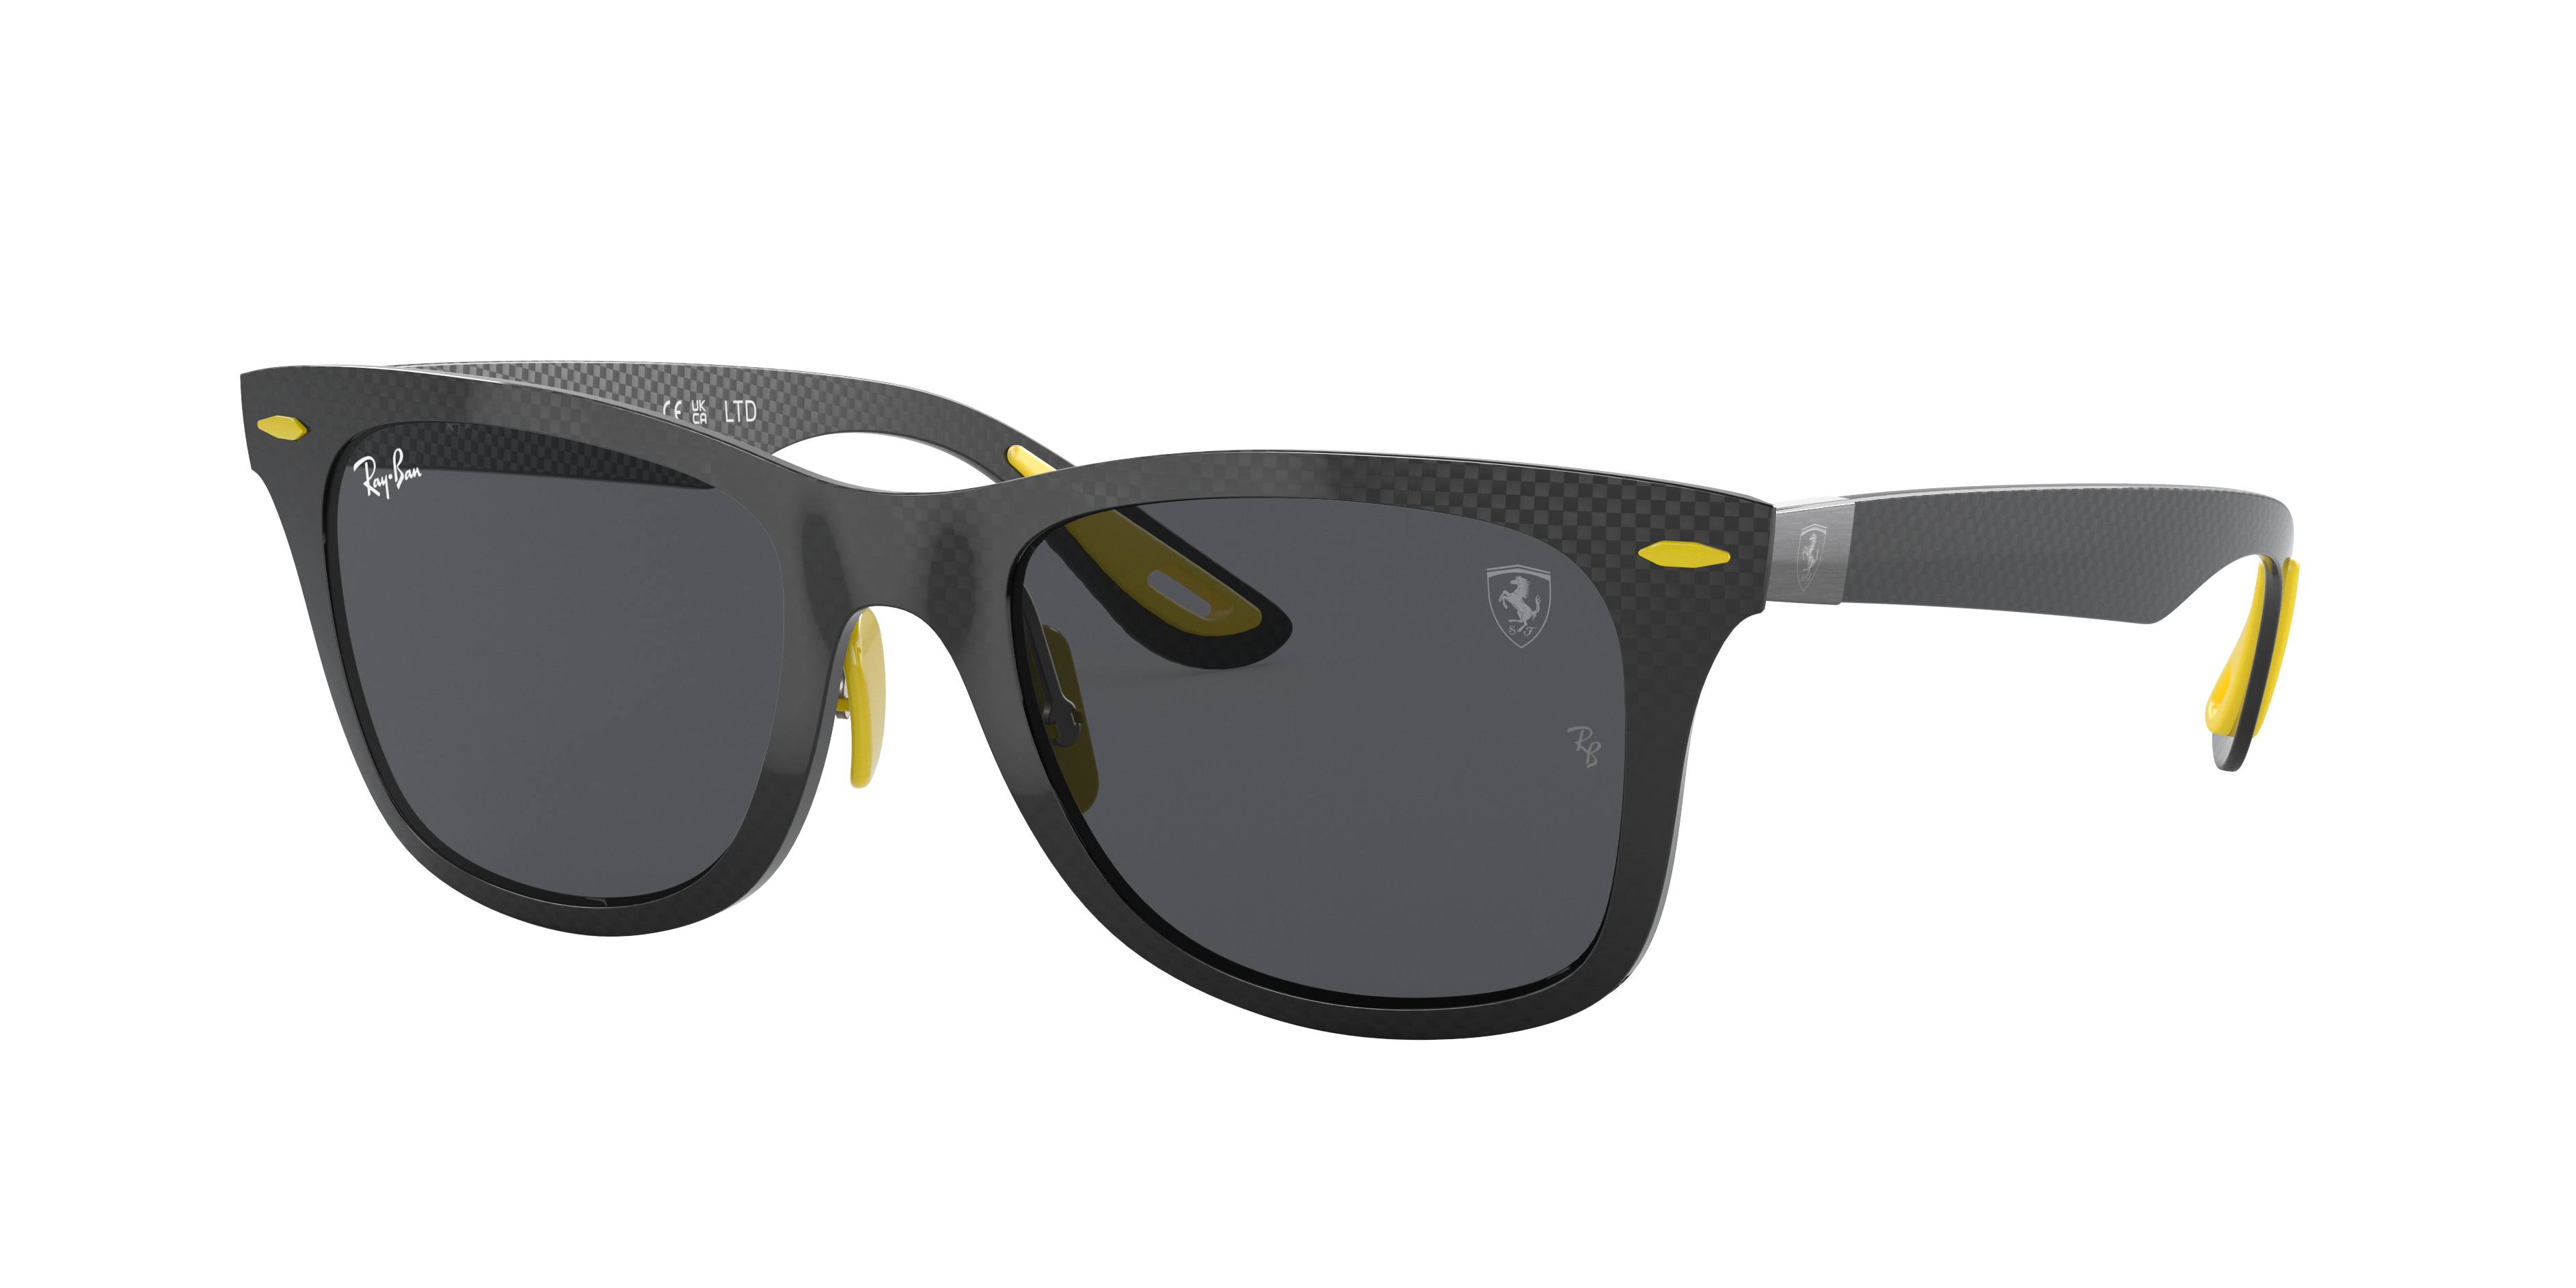 Ewell Monetair Regelen Wayfarer Carbon Fiber | Ferrari 75th Anniversary Edition Sunglasses in  Black and Dark Grey | Ray-Ban®